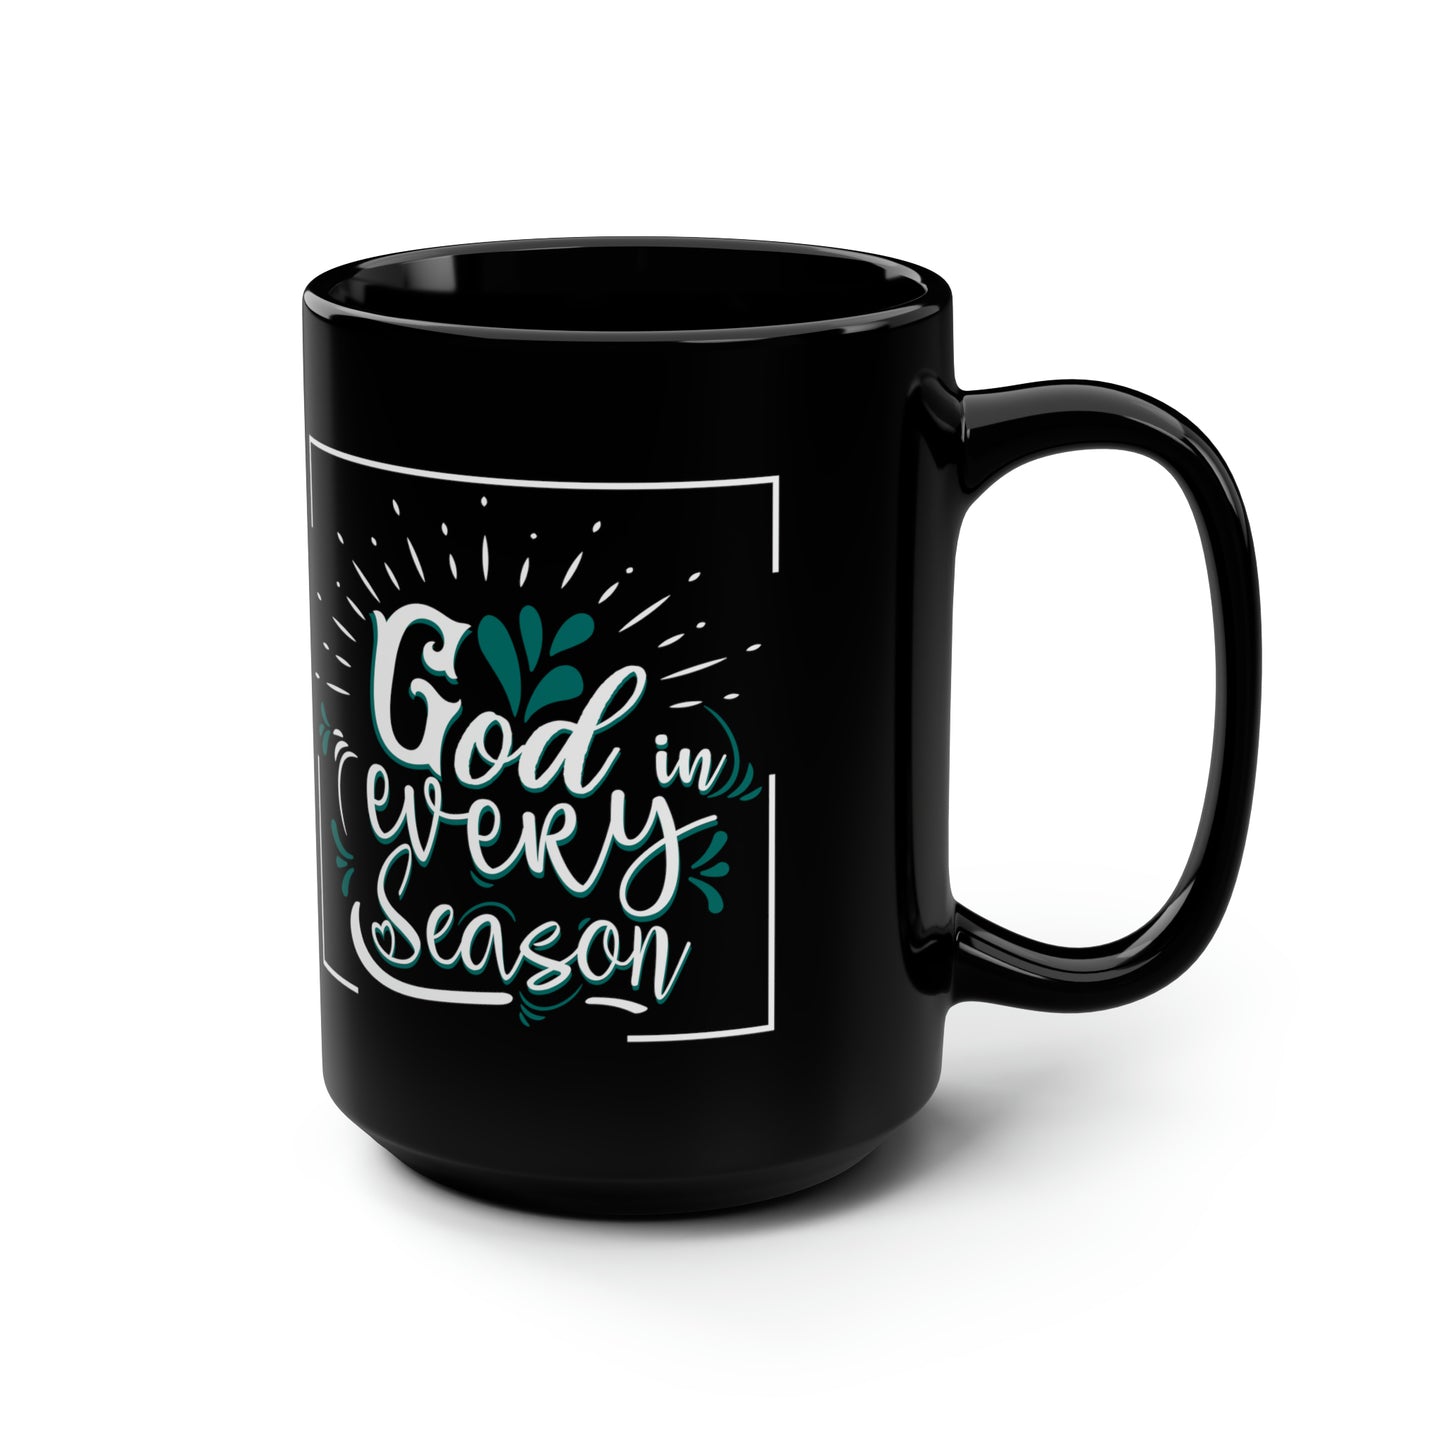 God In Every Season Christian Black Ceramic Mug, 15oz (double sided print)